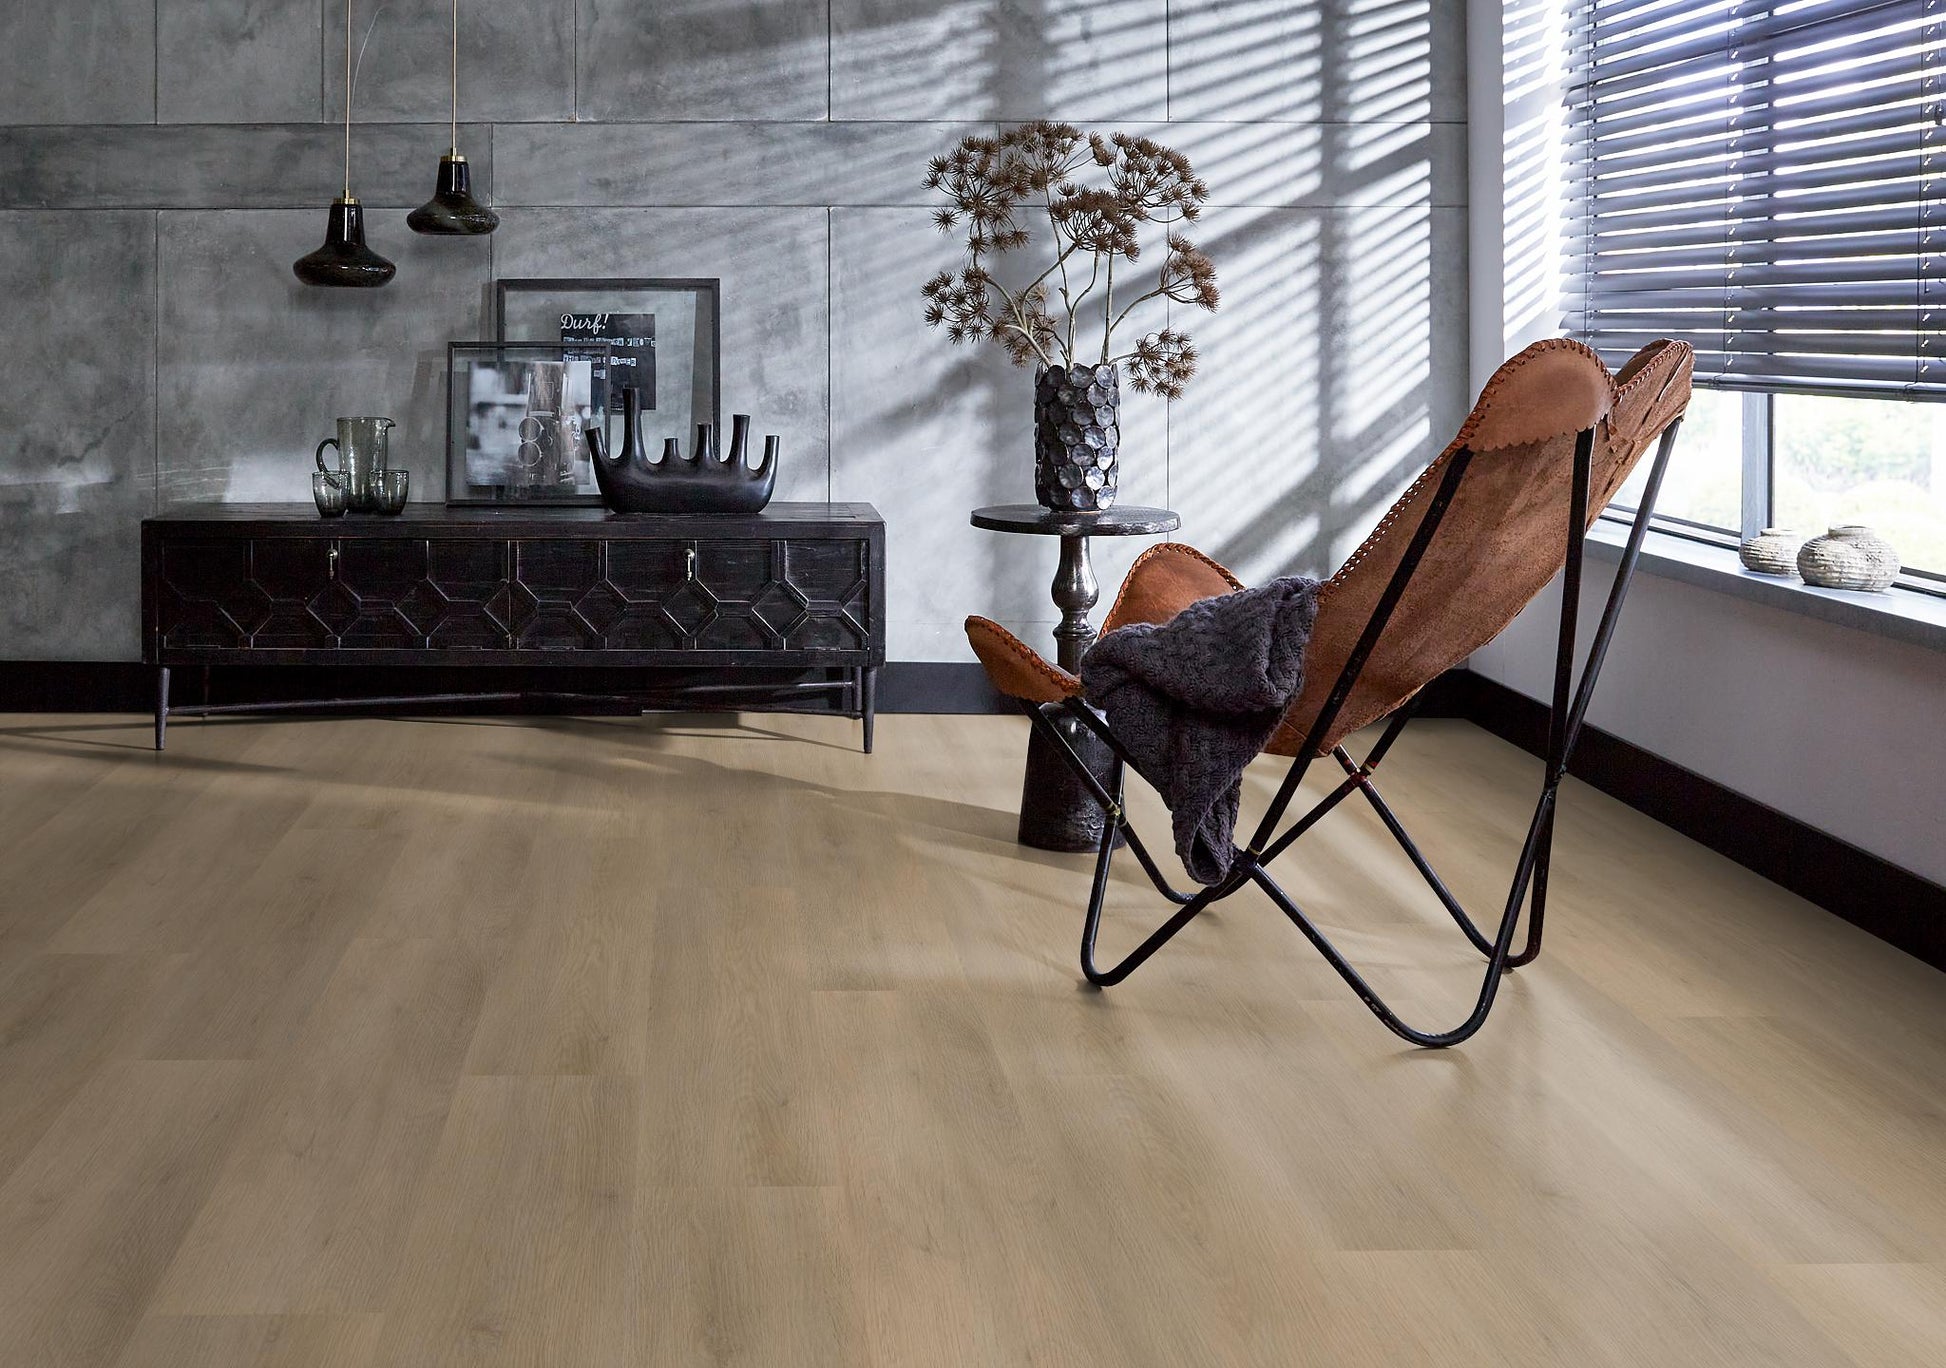 Floorlife Click PVC Newham Natural Oak 8413 - Noestarm eiken 122 x 22.9 cm - Solza.nl